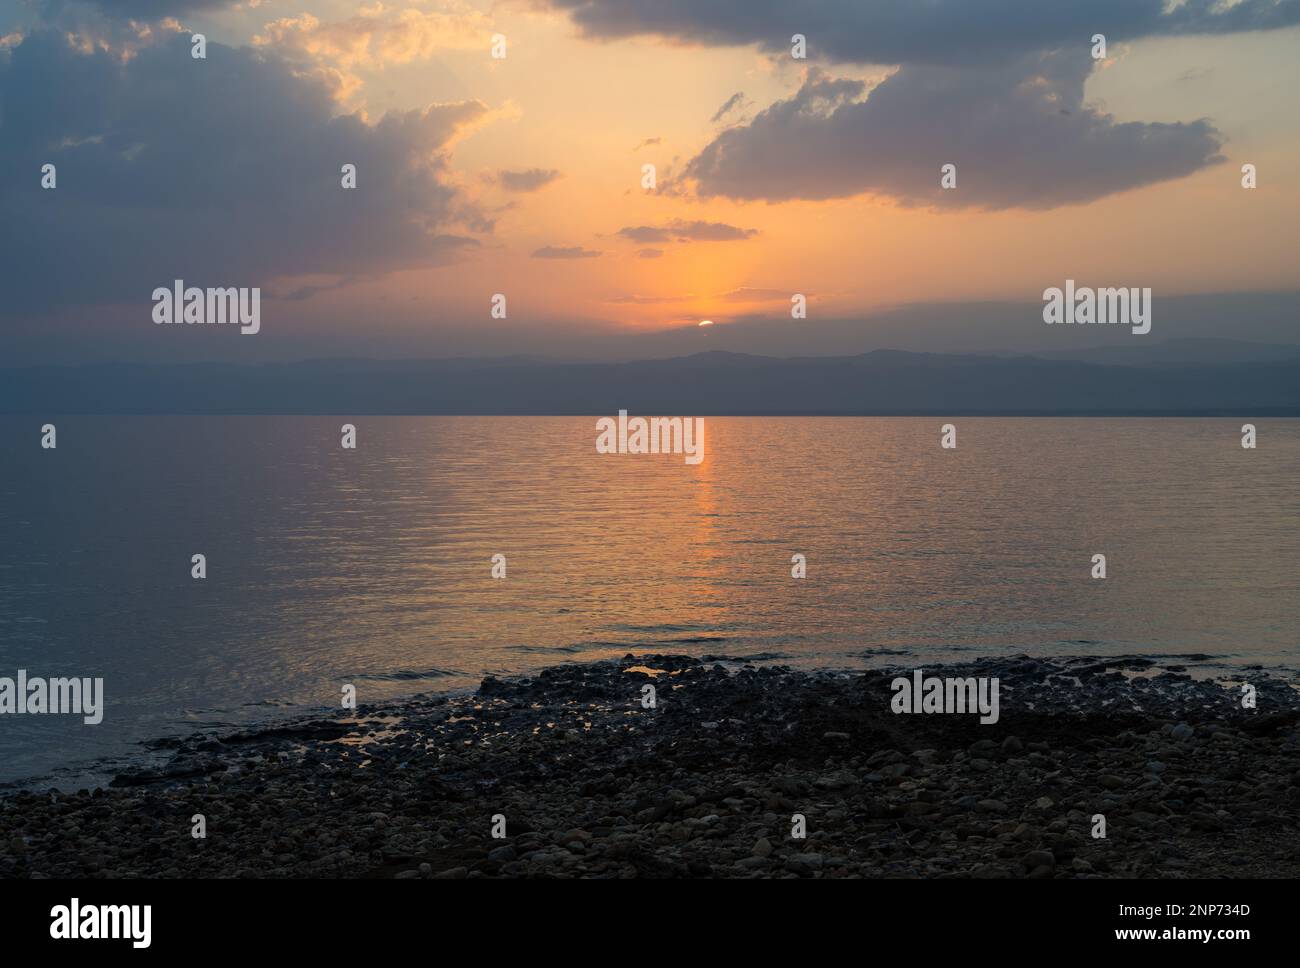 Sunset on the Dead Sea Coast, an Evening Landscape at Dusk near Sweimeh, Jordan Stock Photo